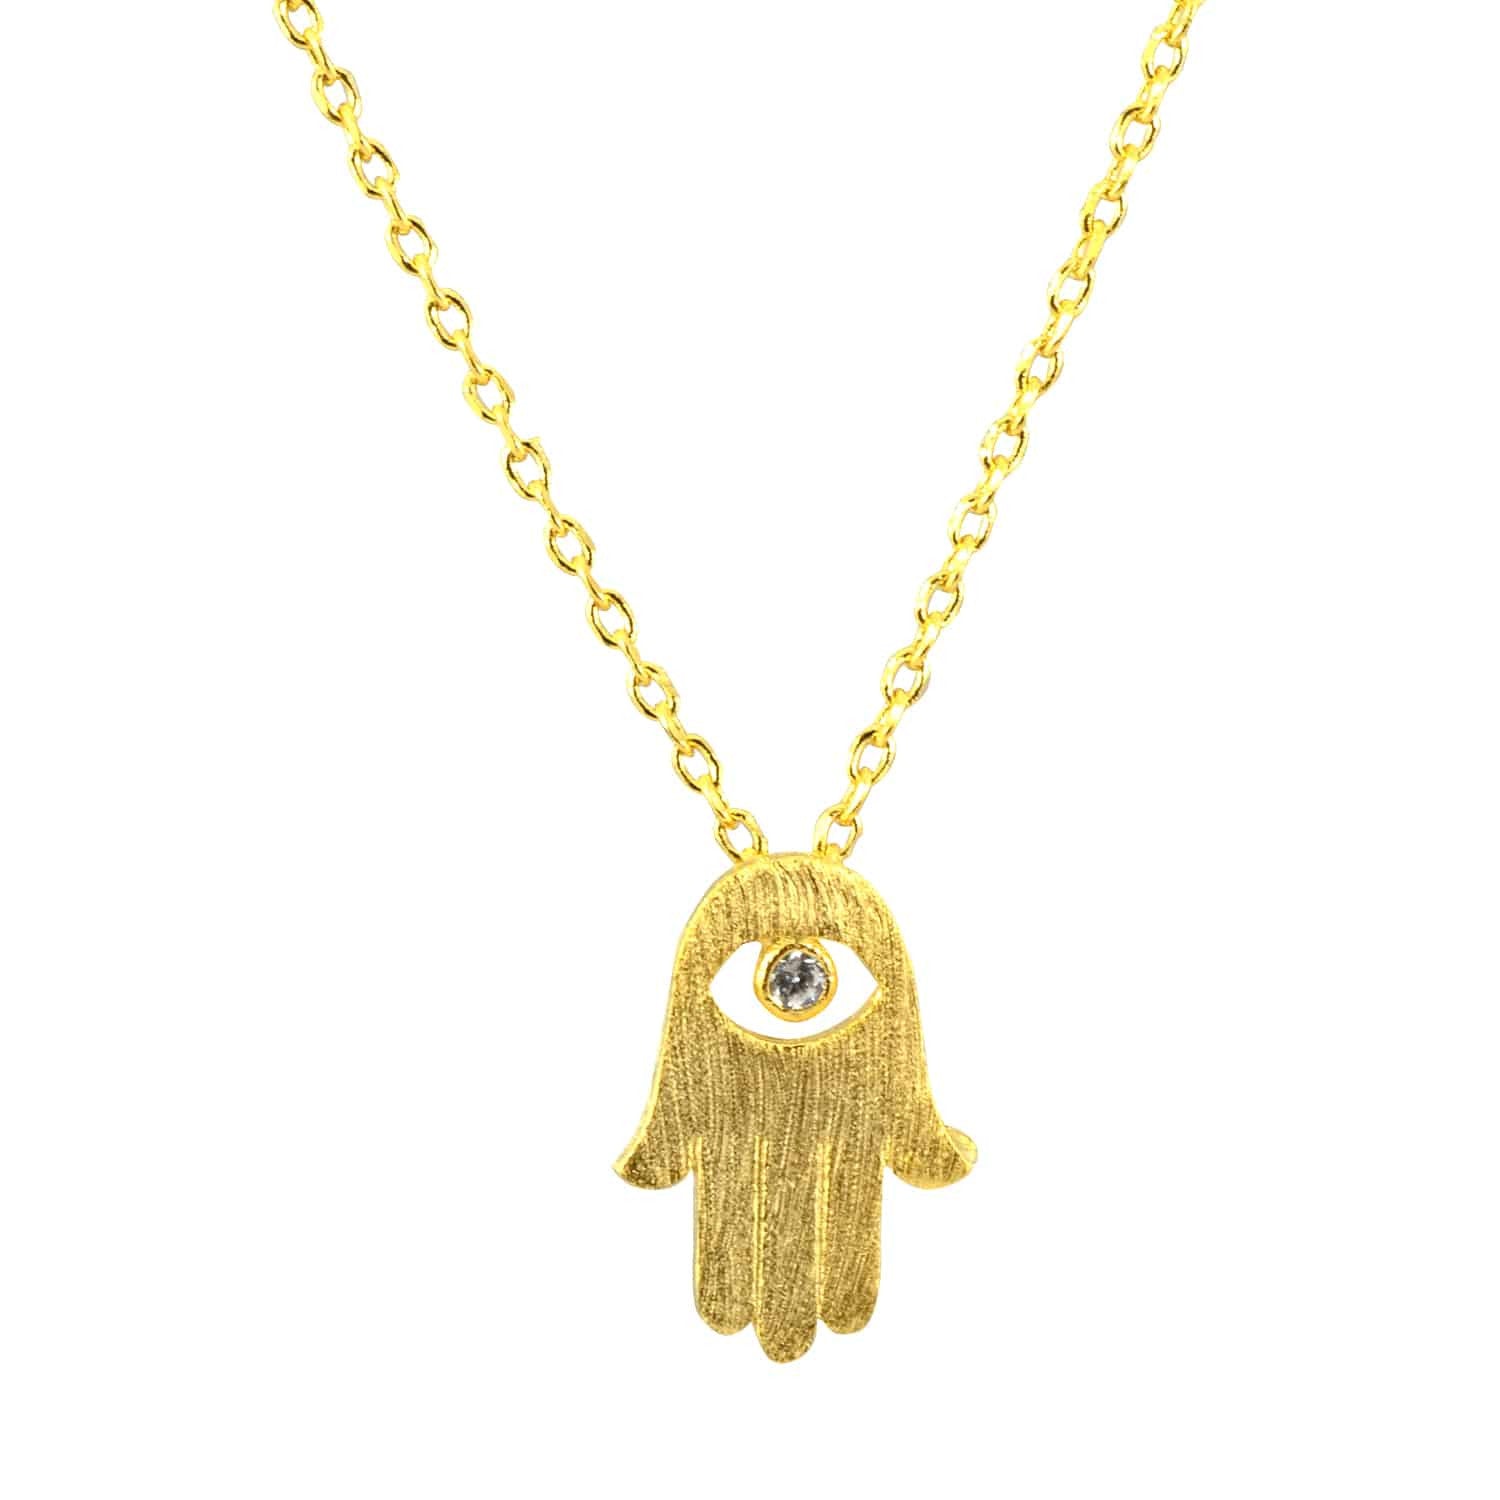 Buy NAISHA 18 k Rose Gold plated Zircon hamsa hand evil eye pendant necklace  at Amazon.in